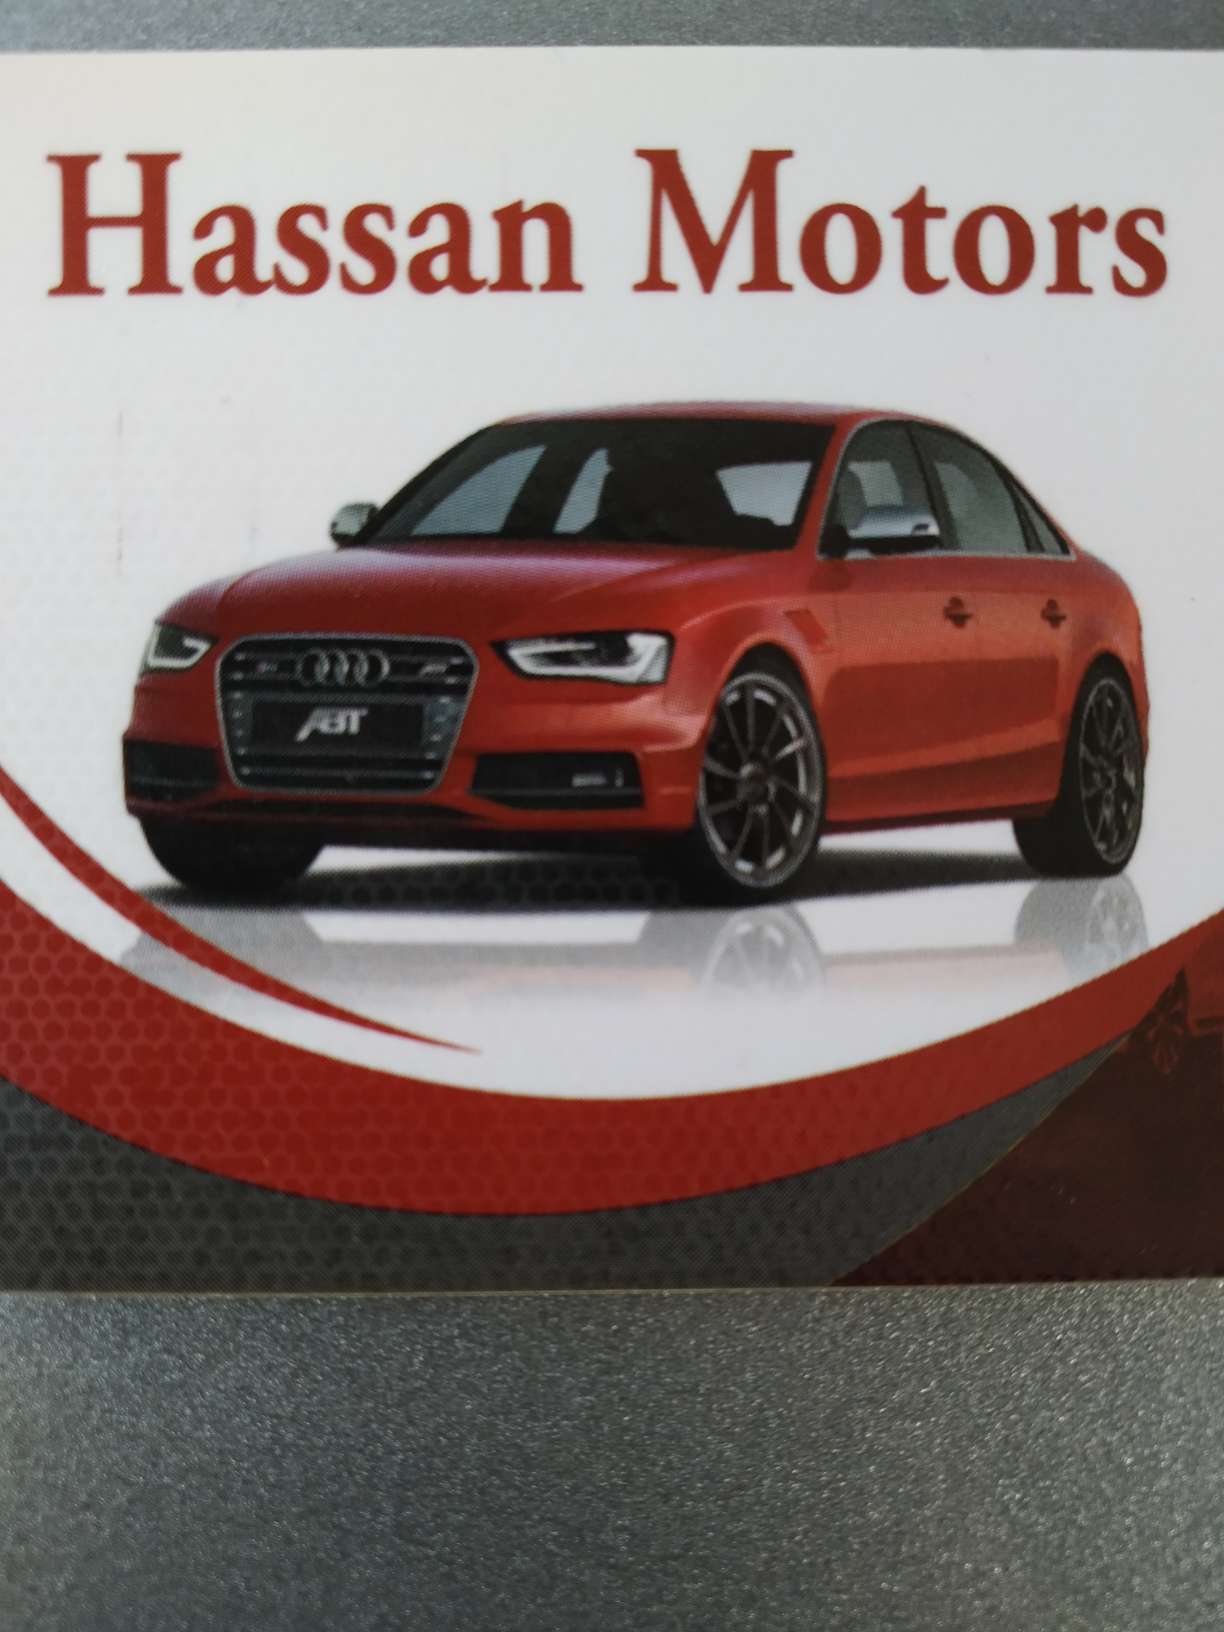 Hassan Motors